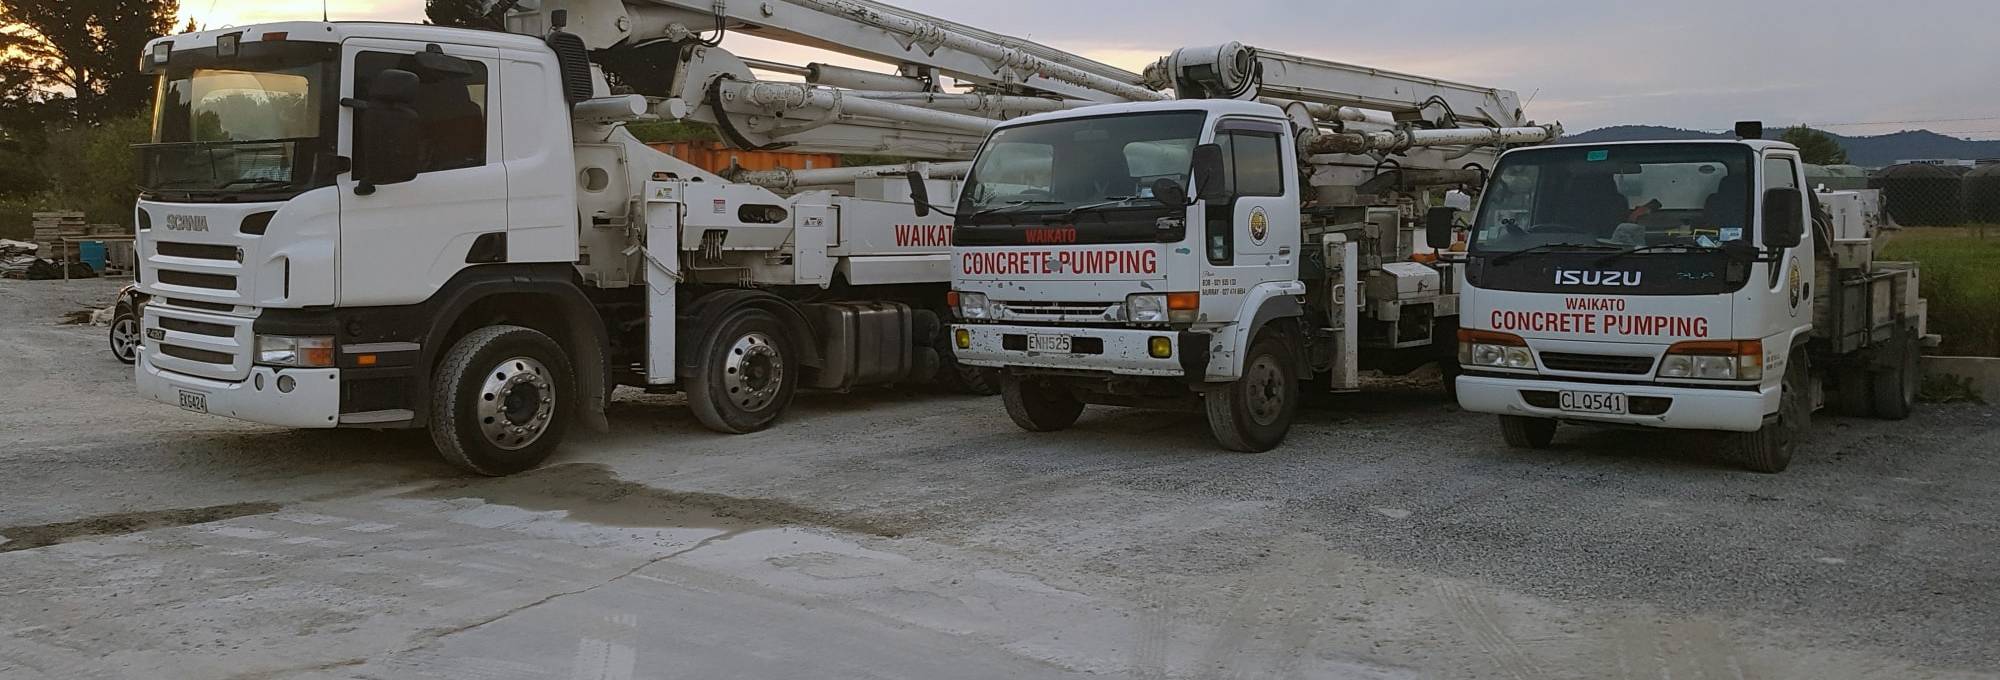 Waikato Concrete Pumping fleet of trucks